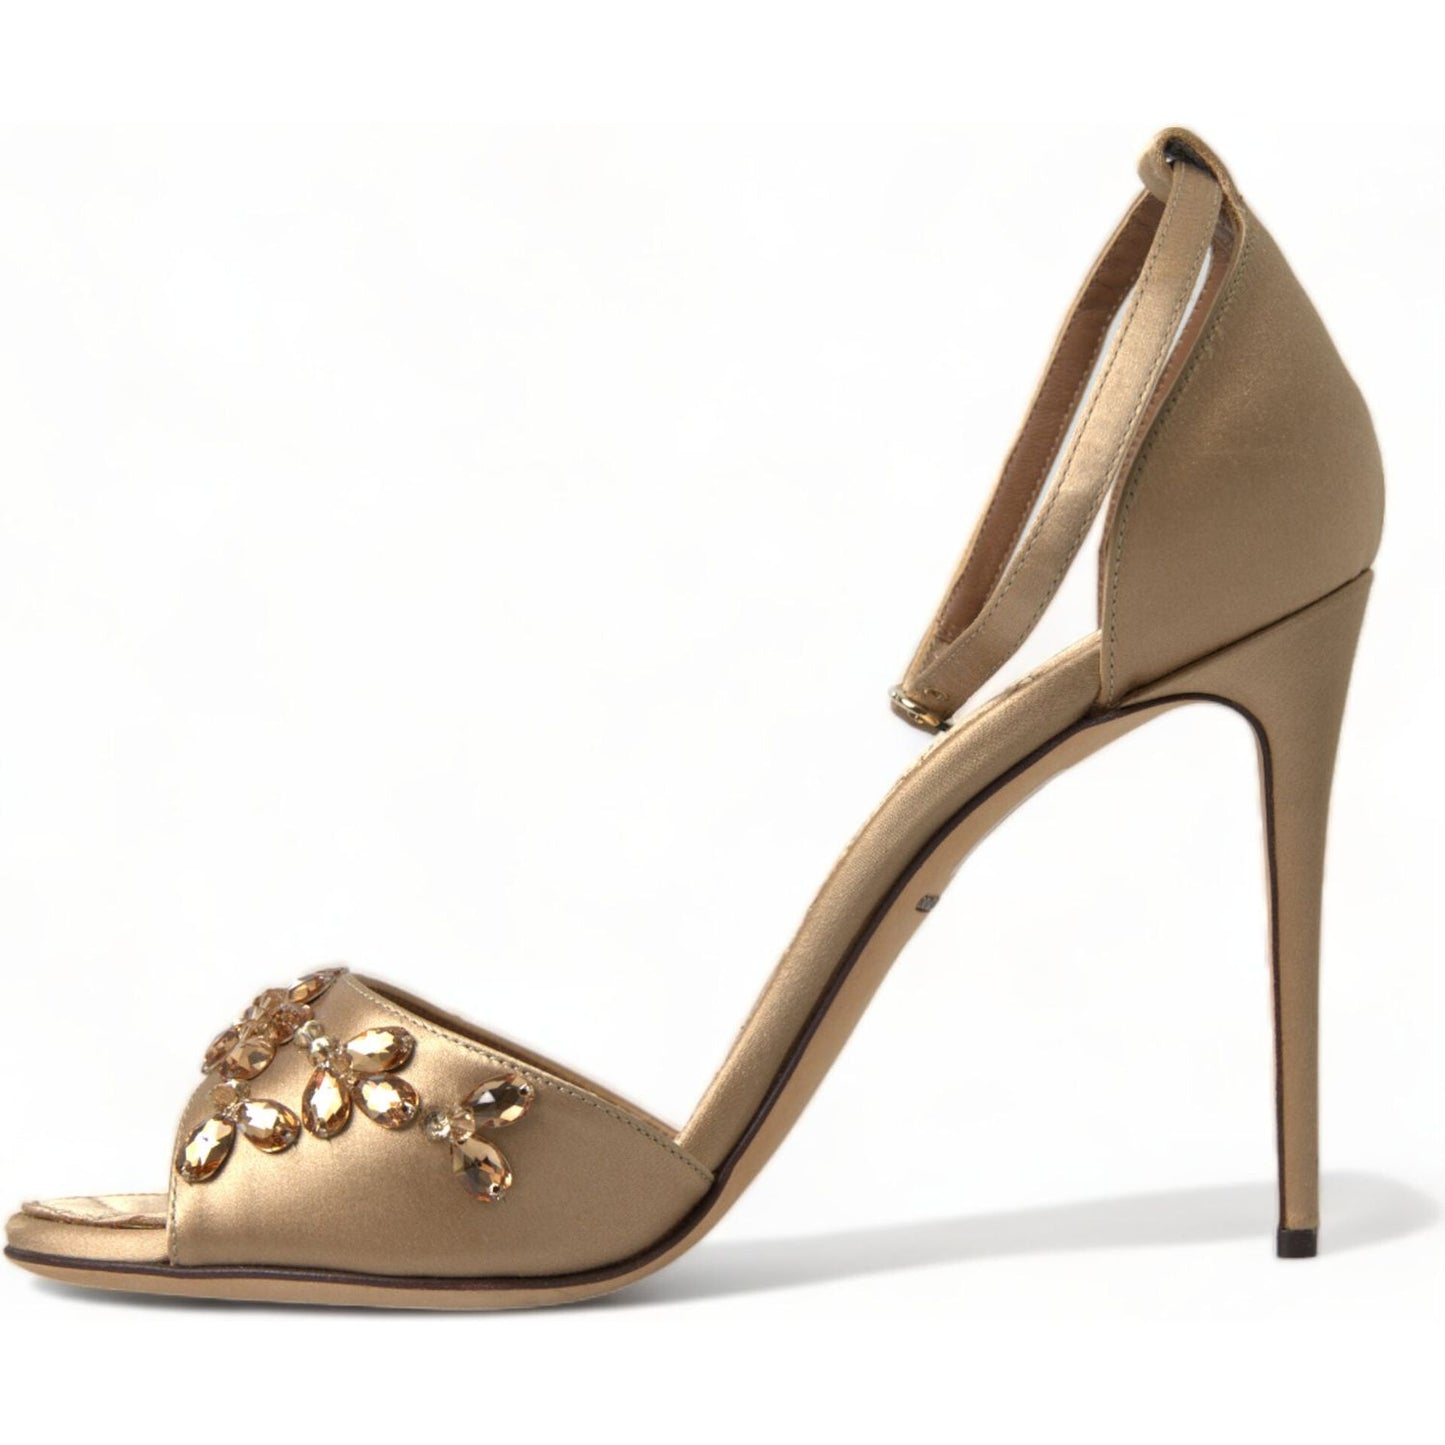 Dolce & Gabbana Crystal Embellished Heel Sandals gold-satin-ankle-strap-crystal-sandals-shoes 465A9644-bg-scaled-a7f2d0e6-dac.jpg